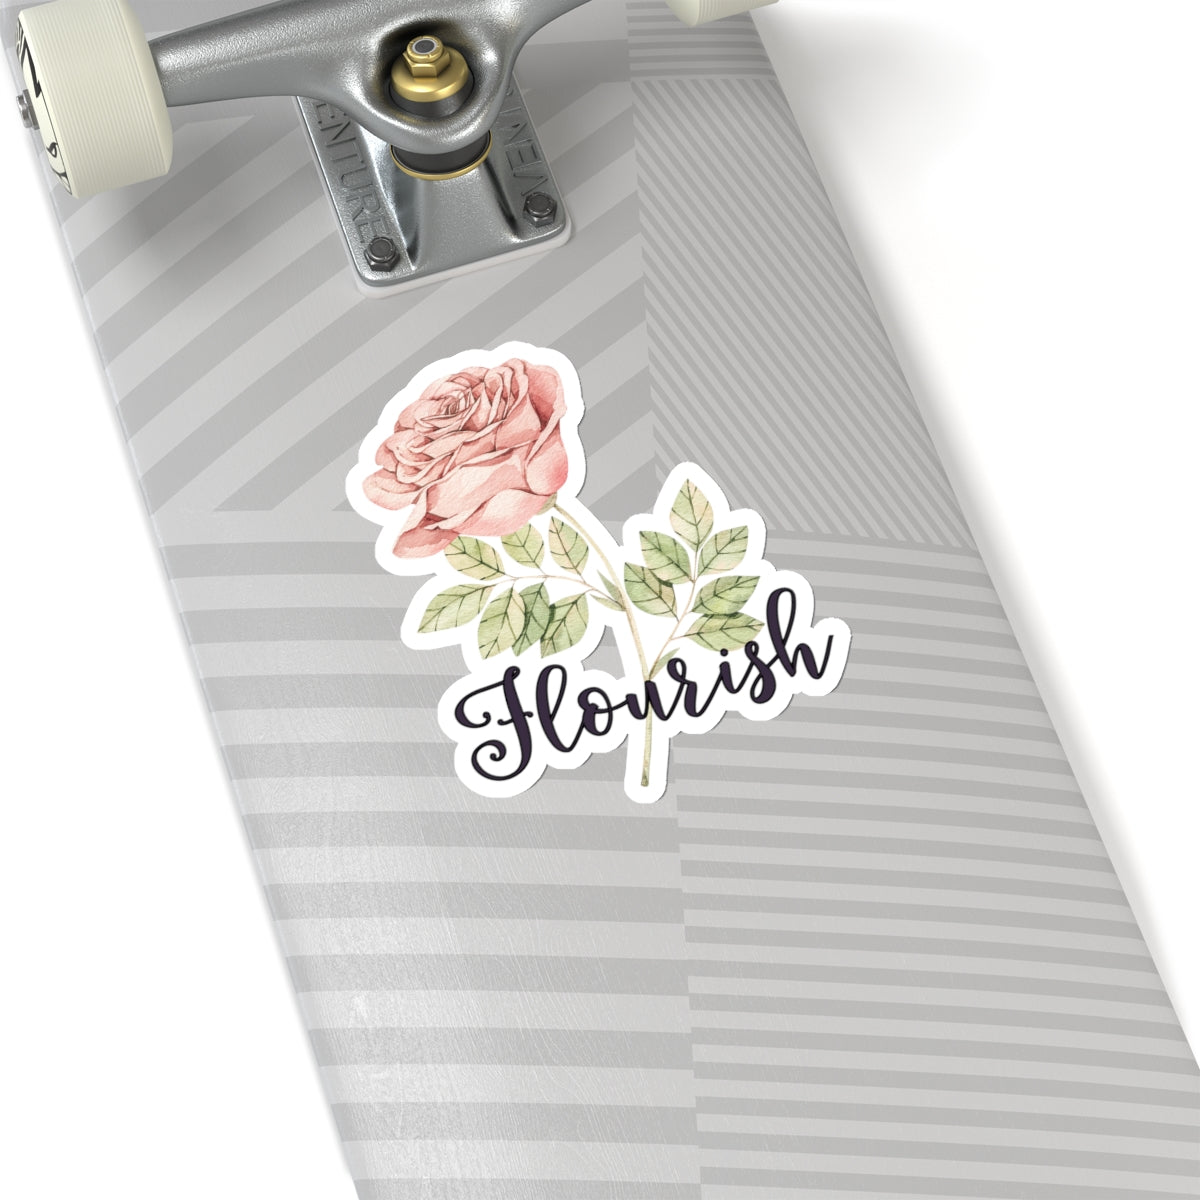 Flourish Rose Sticker